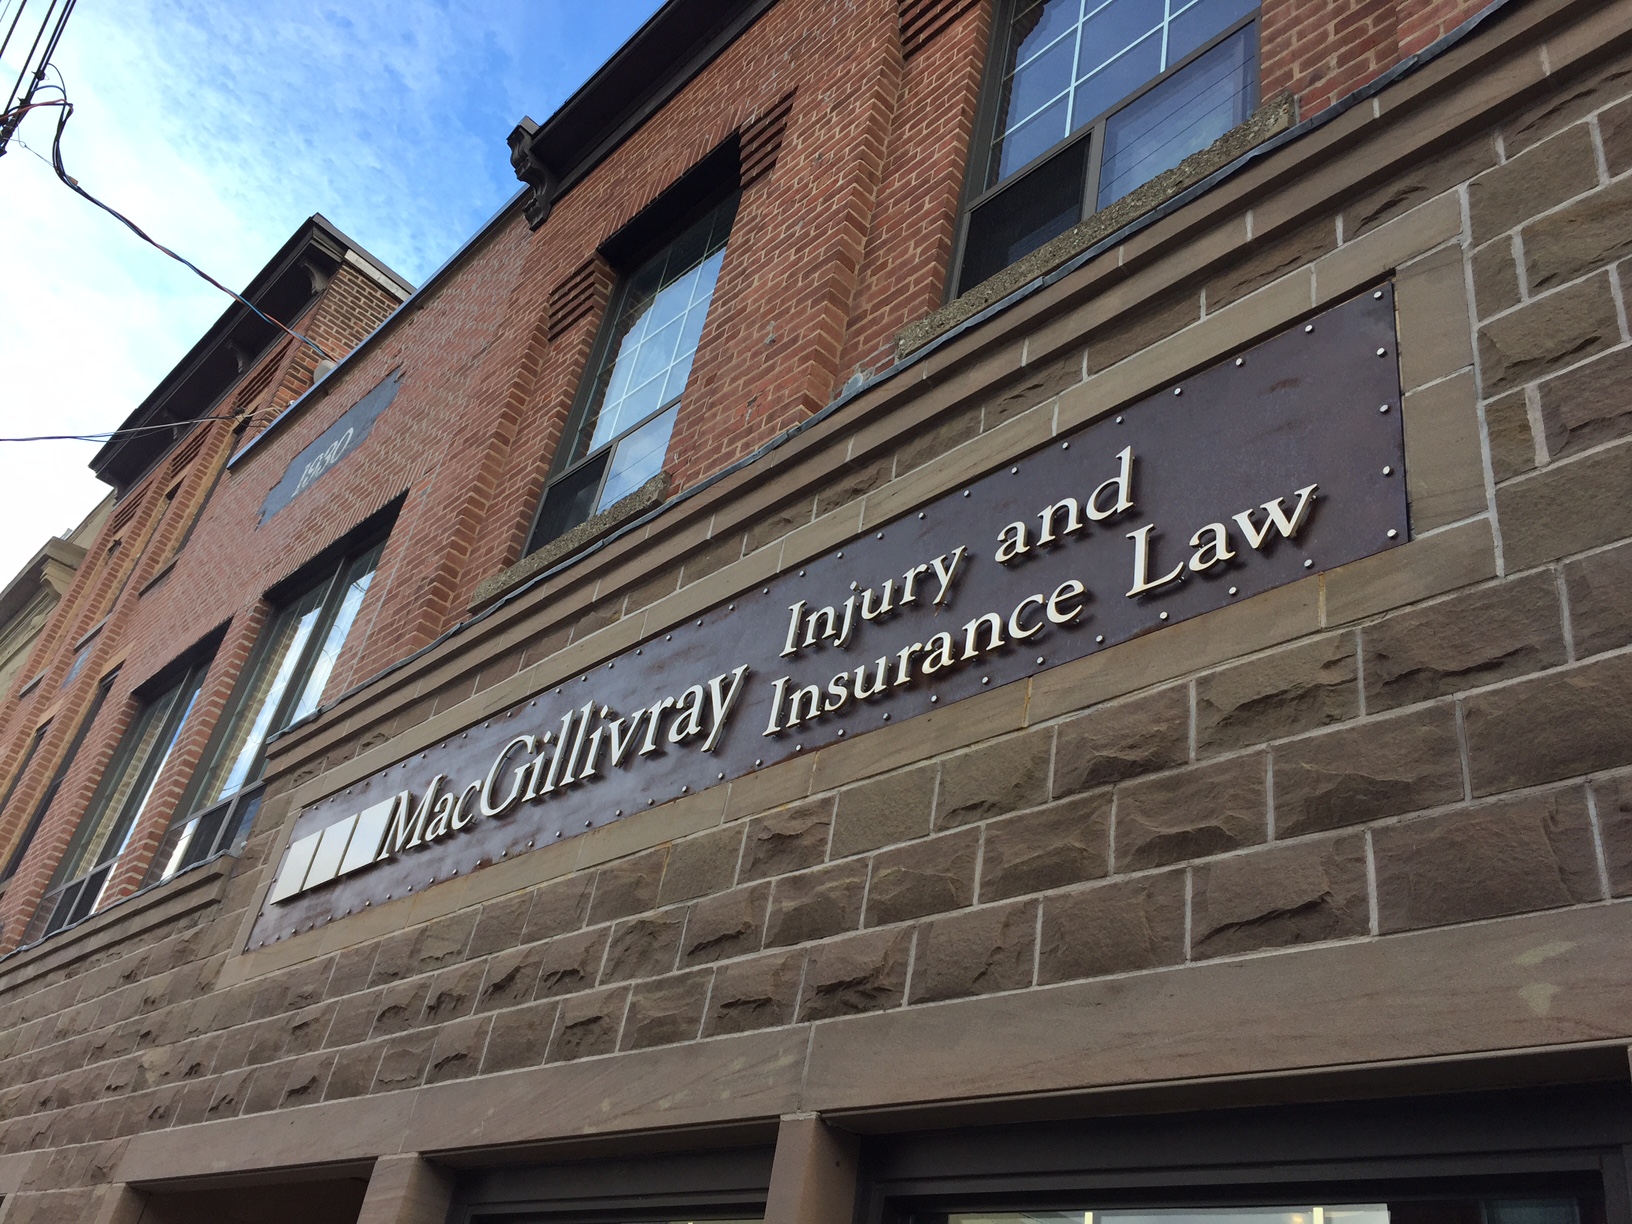 MacGillivray Injury & Insurance Law 134 Provost St, New Glasgow Nova Scotia B2H 2P7